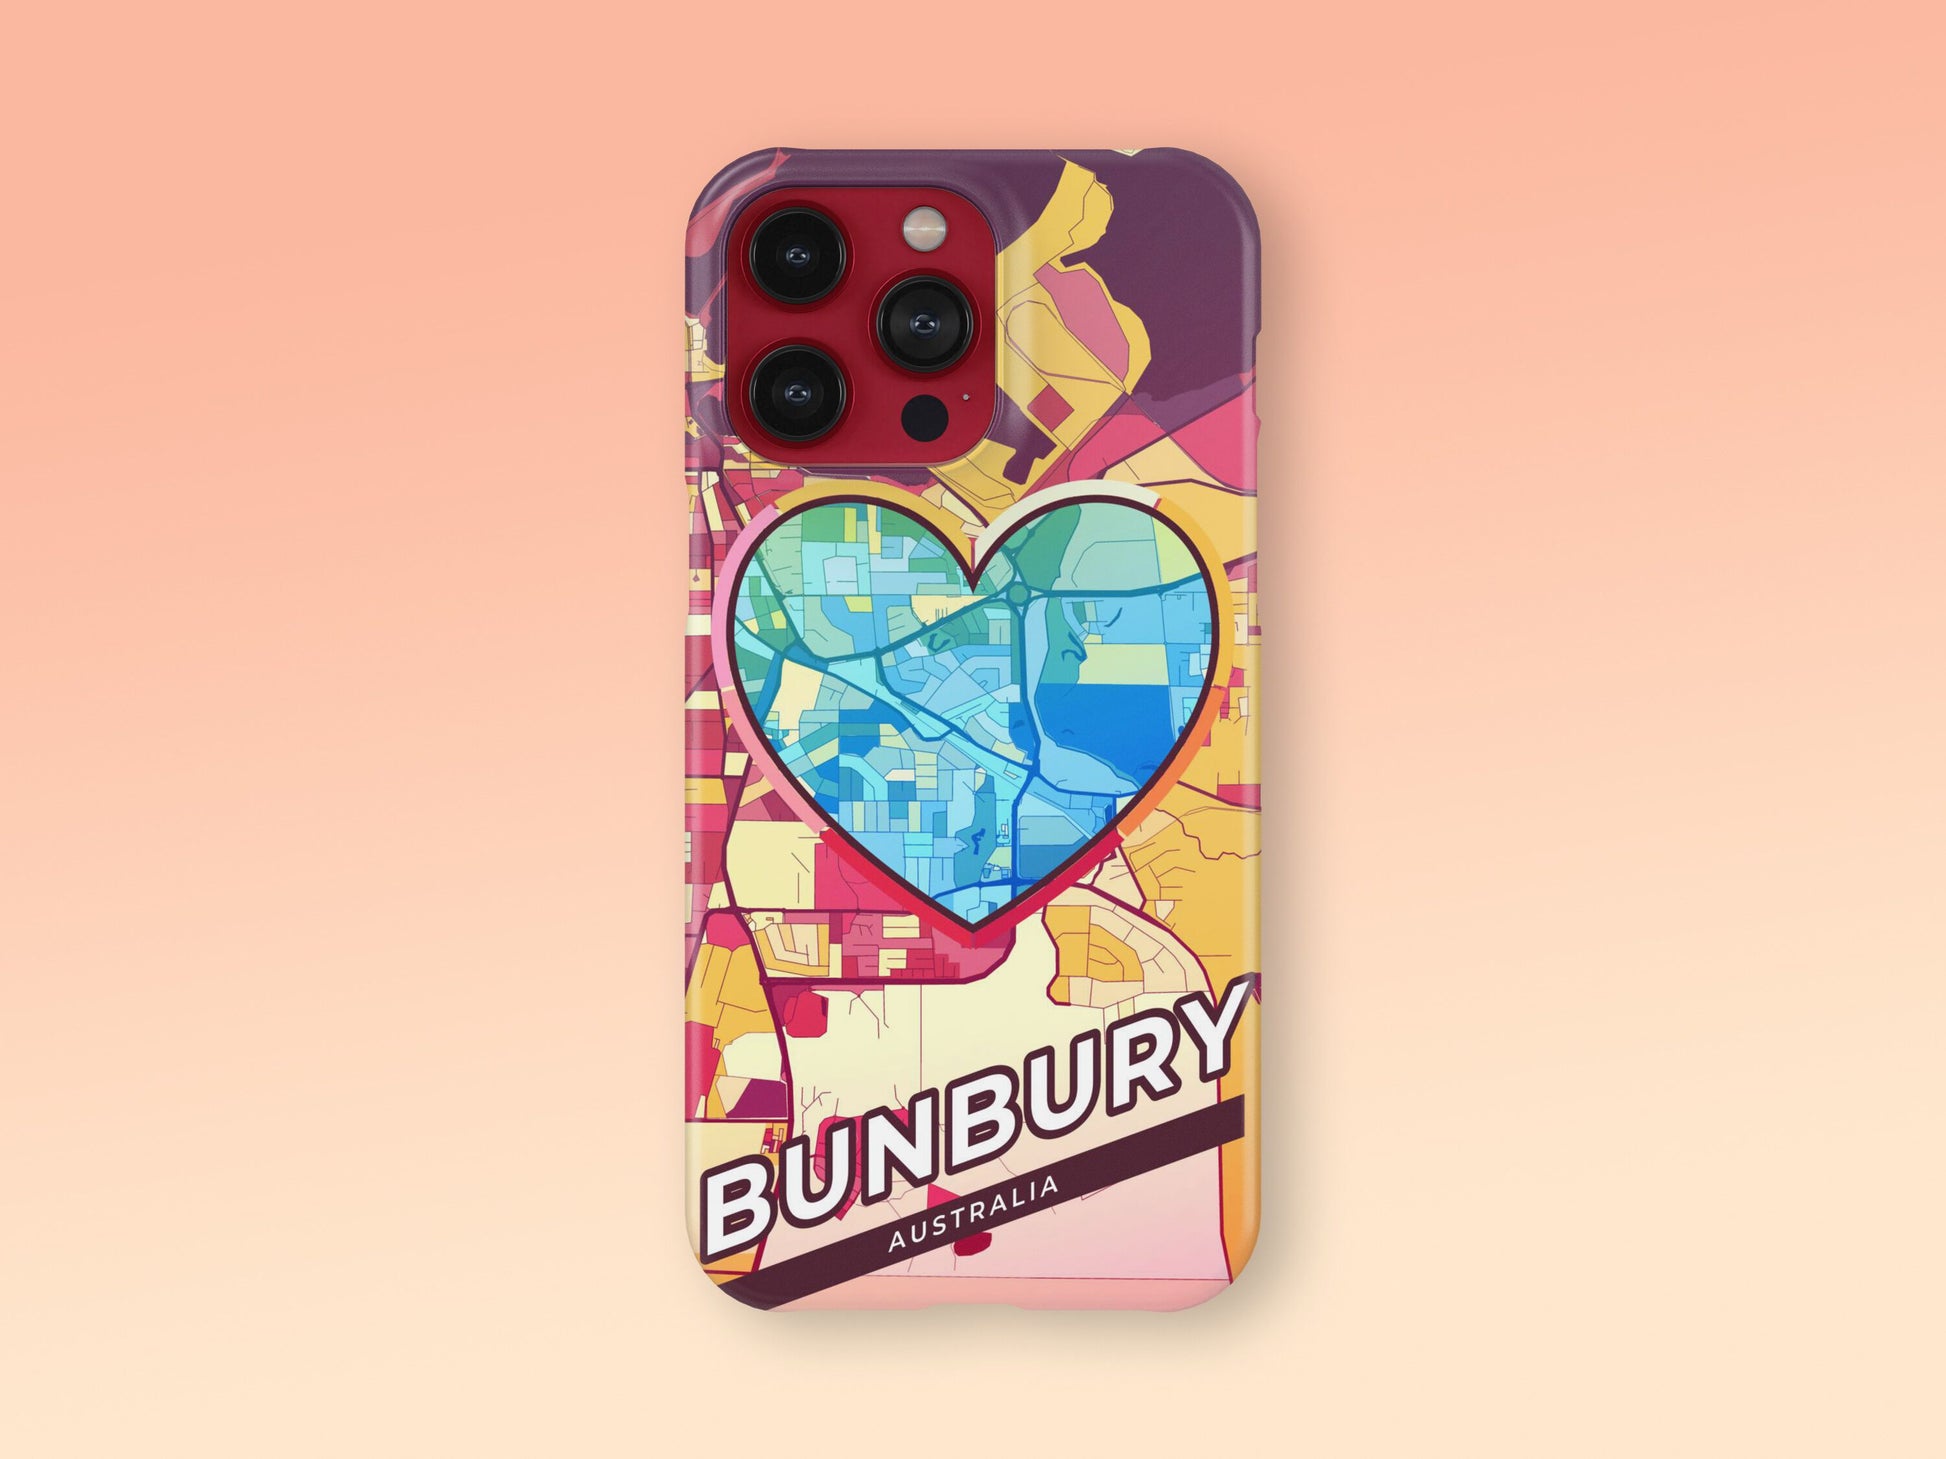 Bunbury Australia slim phone case with colorful icon. Birthday, wedding or housewarming gift. Couple match cases. 2